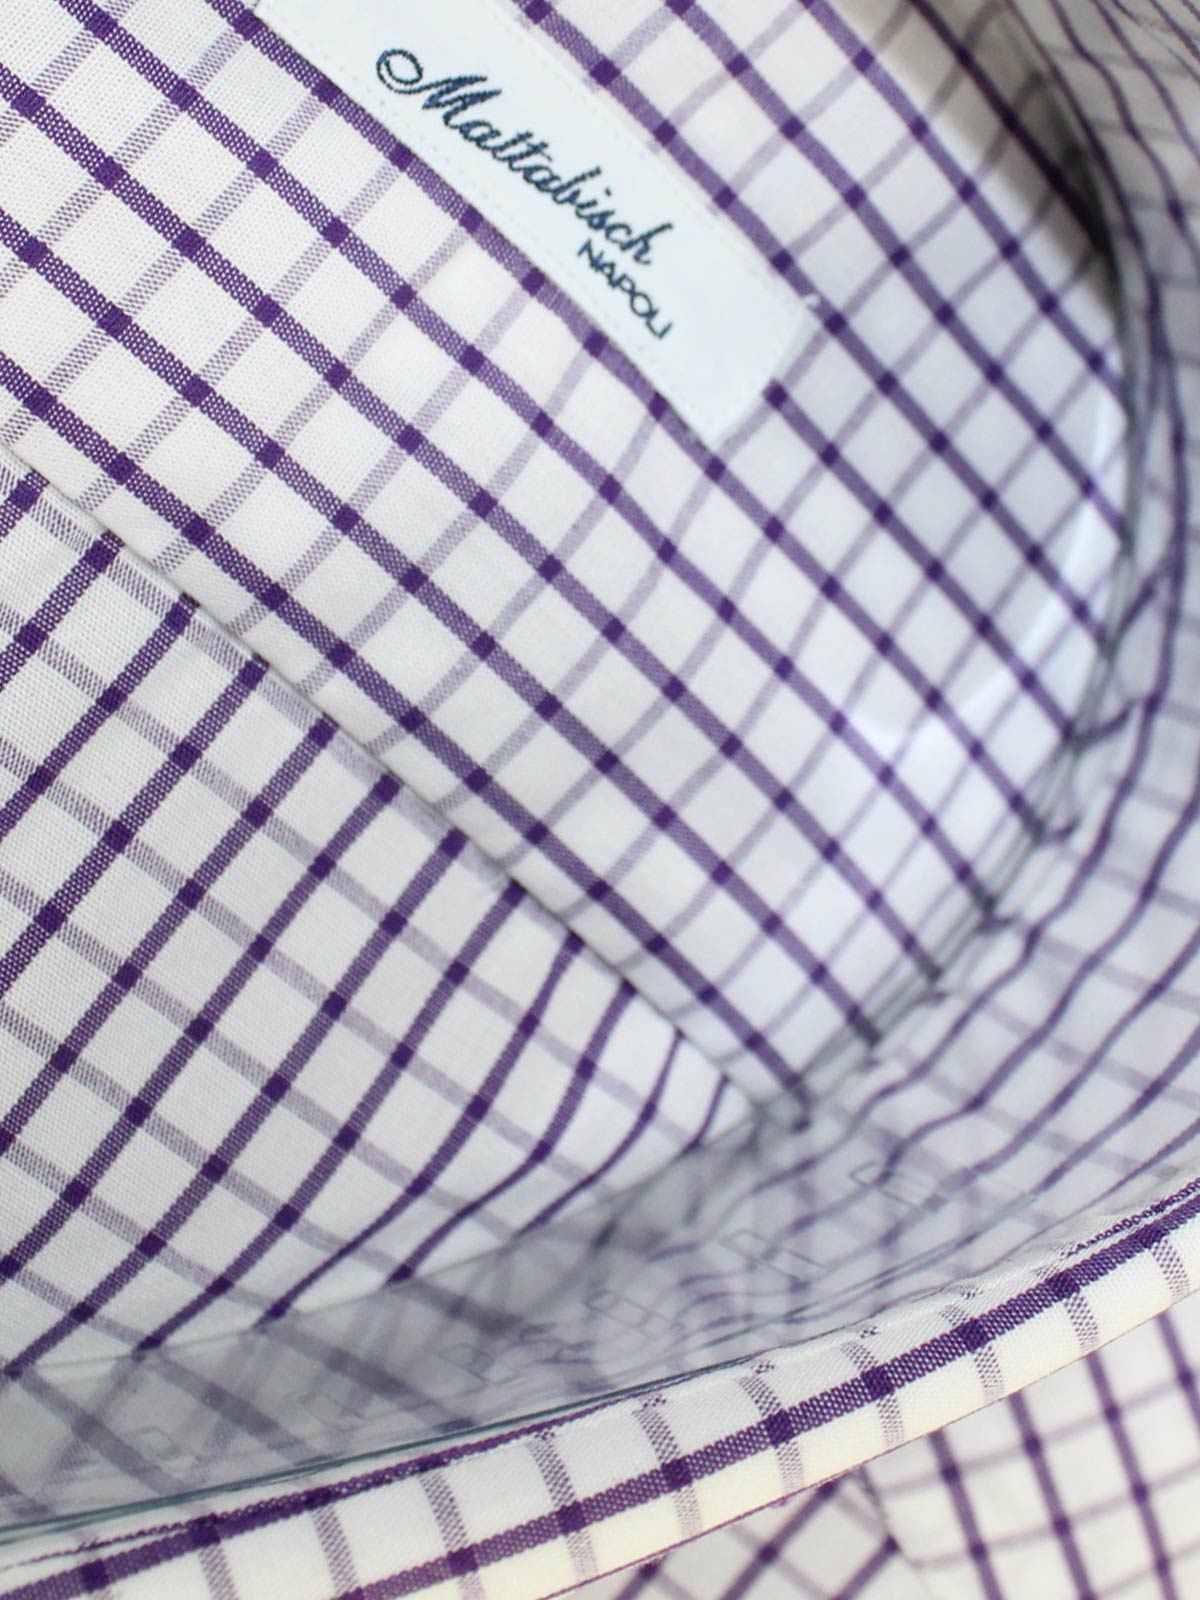 Mattabisch Shirt White Purple Graph Check 40 - 15 3/4 SALE